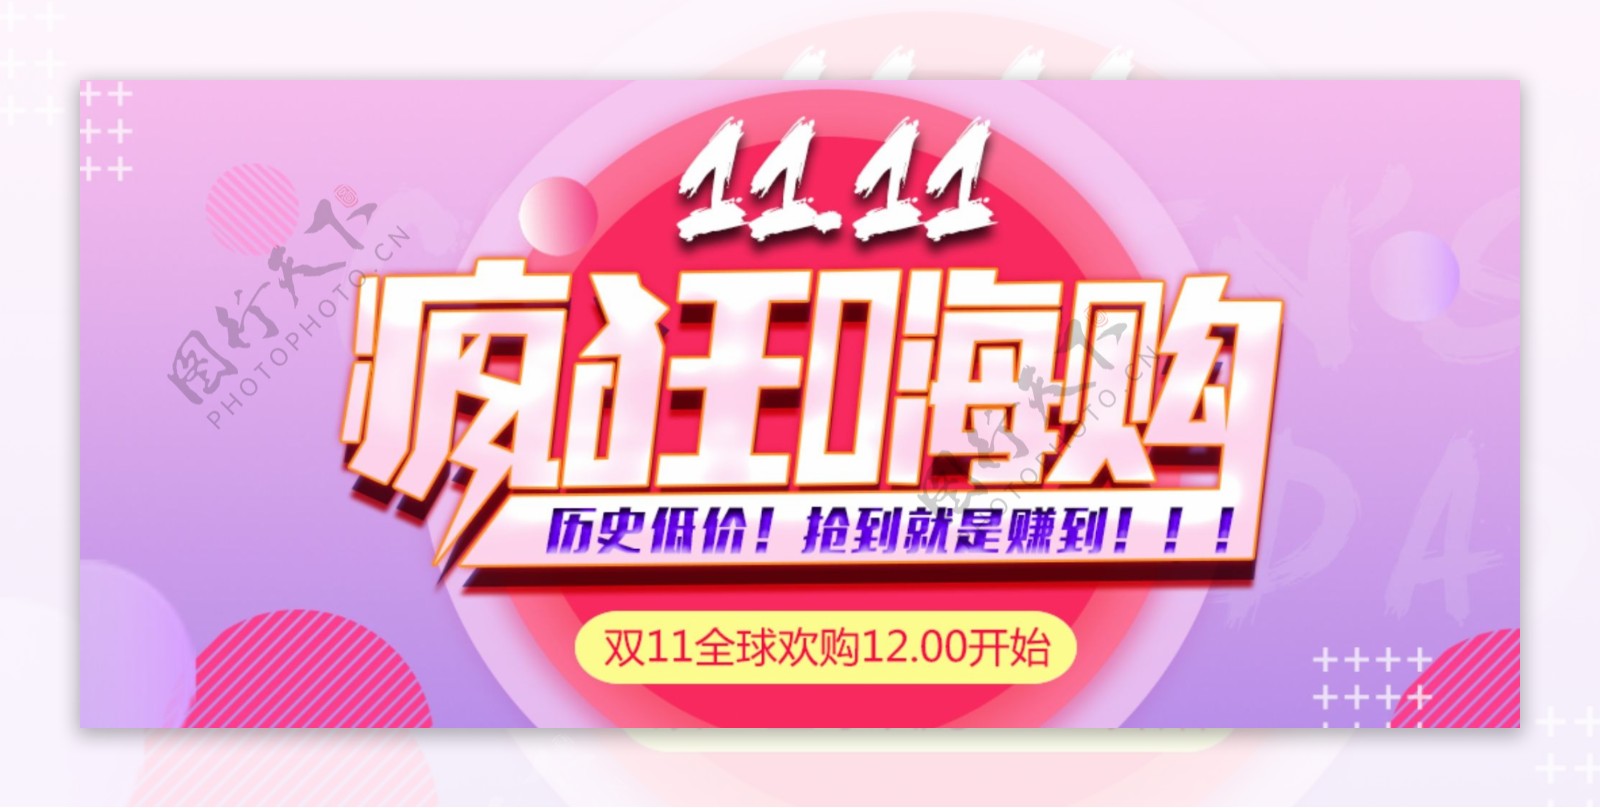 双11嗨购海报banner